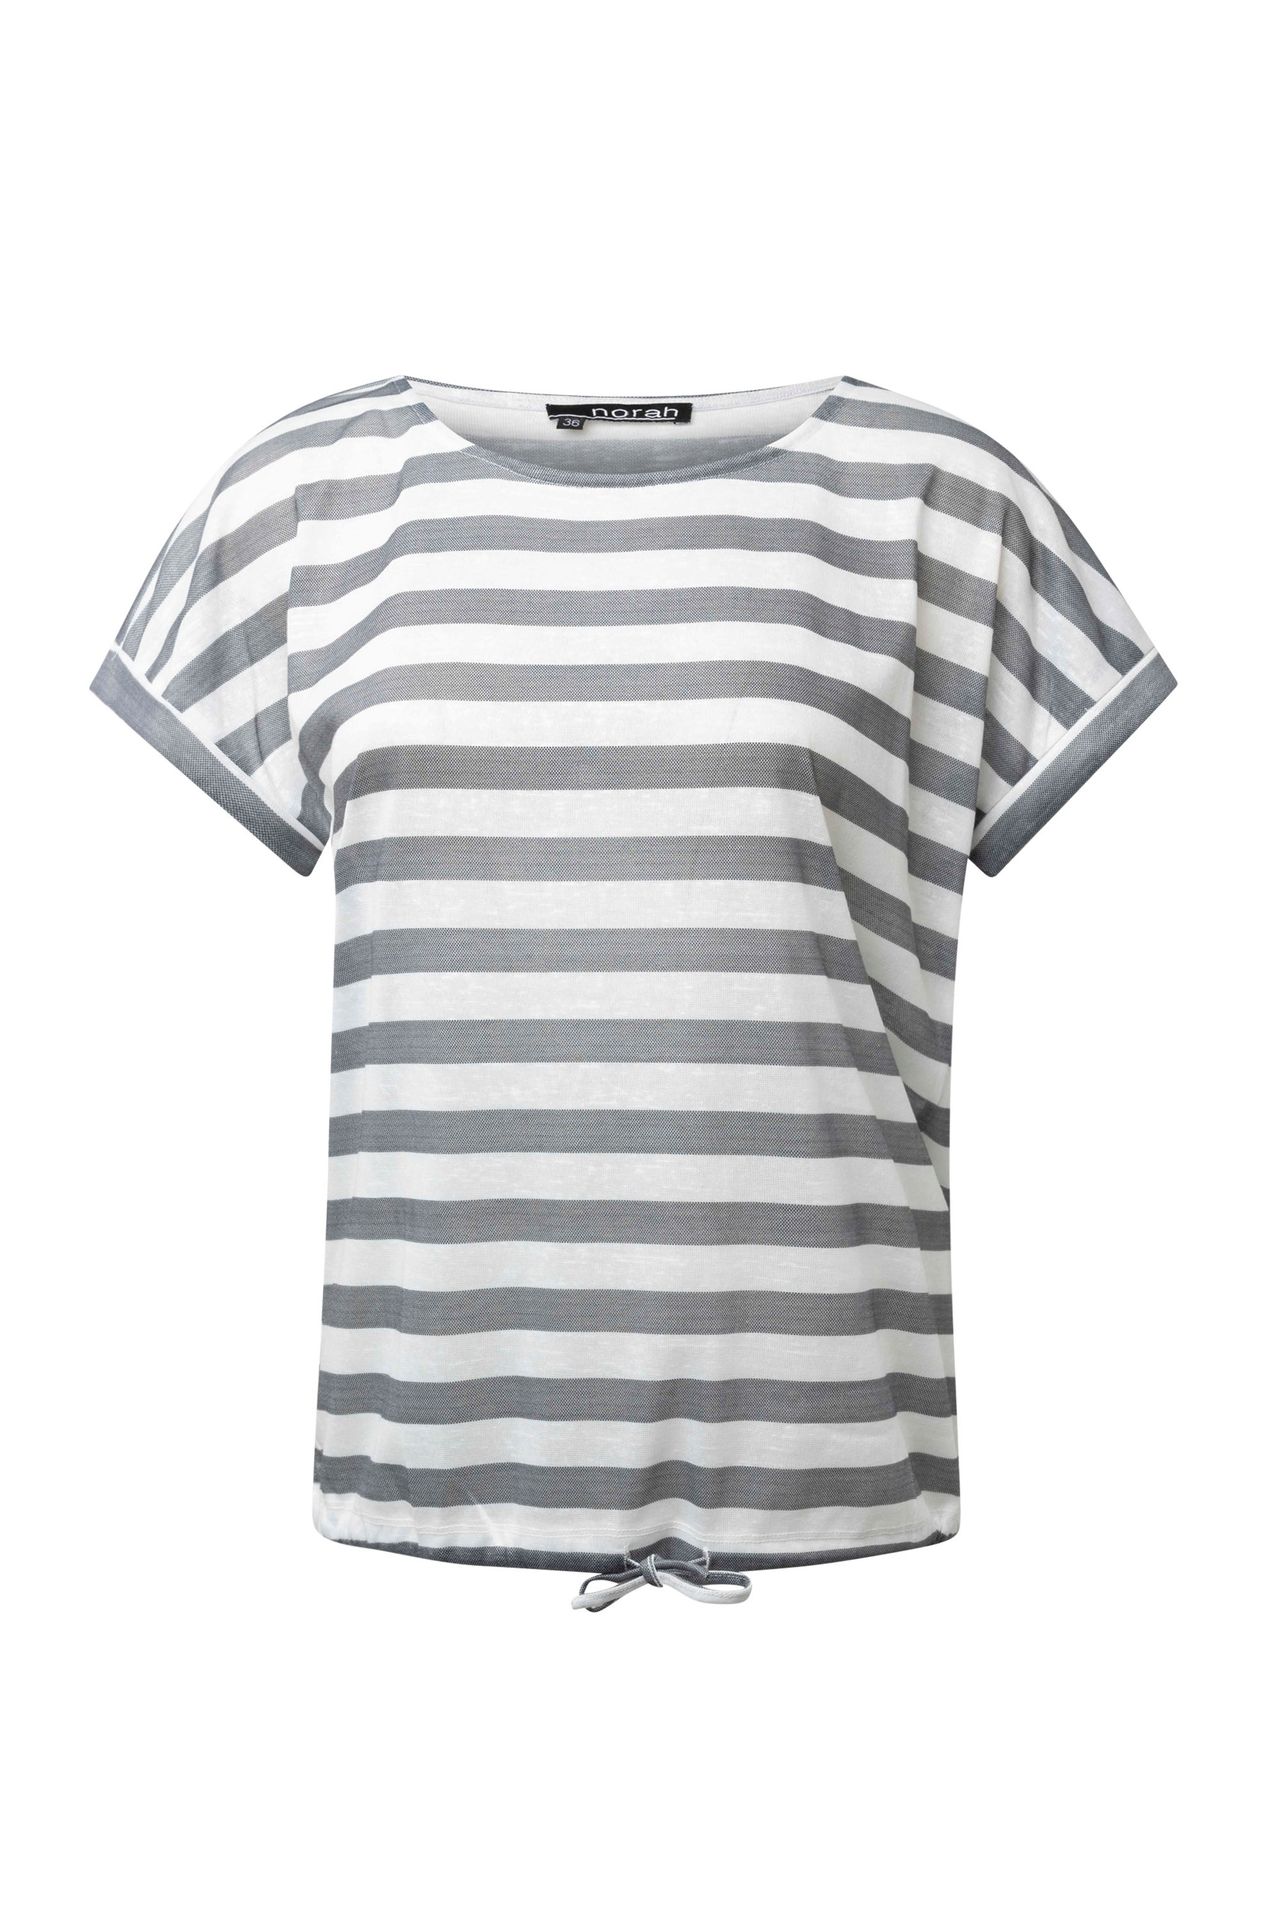 Norah Gestreept shirt grijs white/grey 213986-141